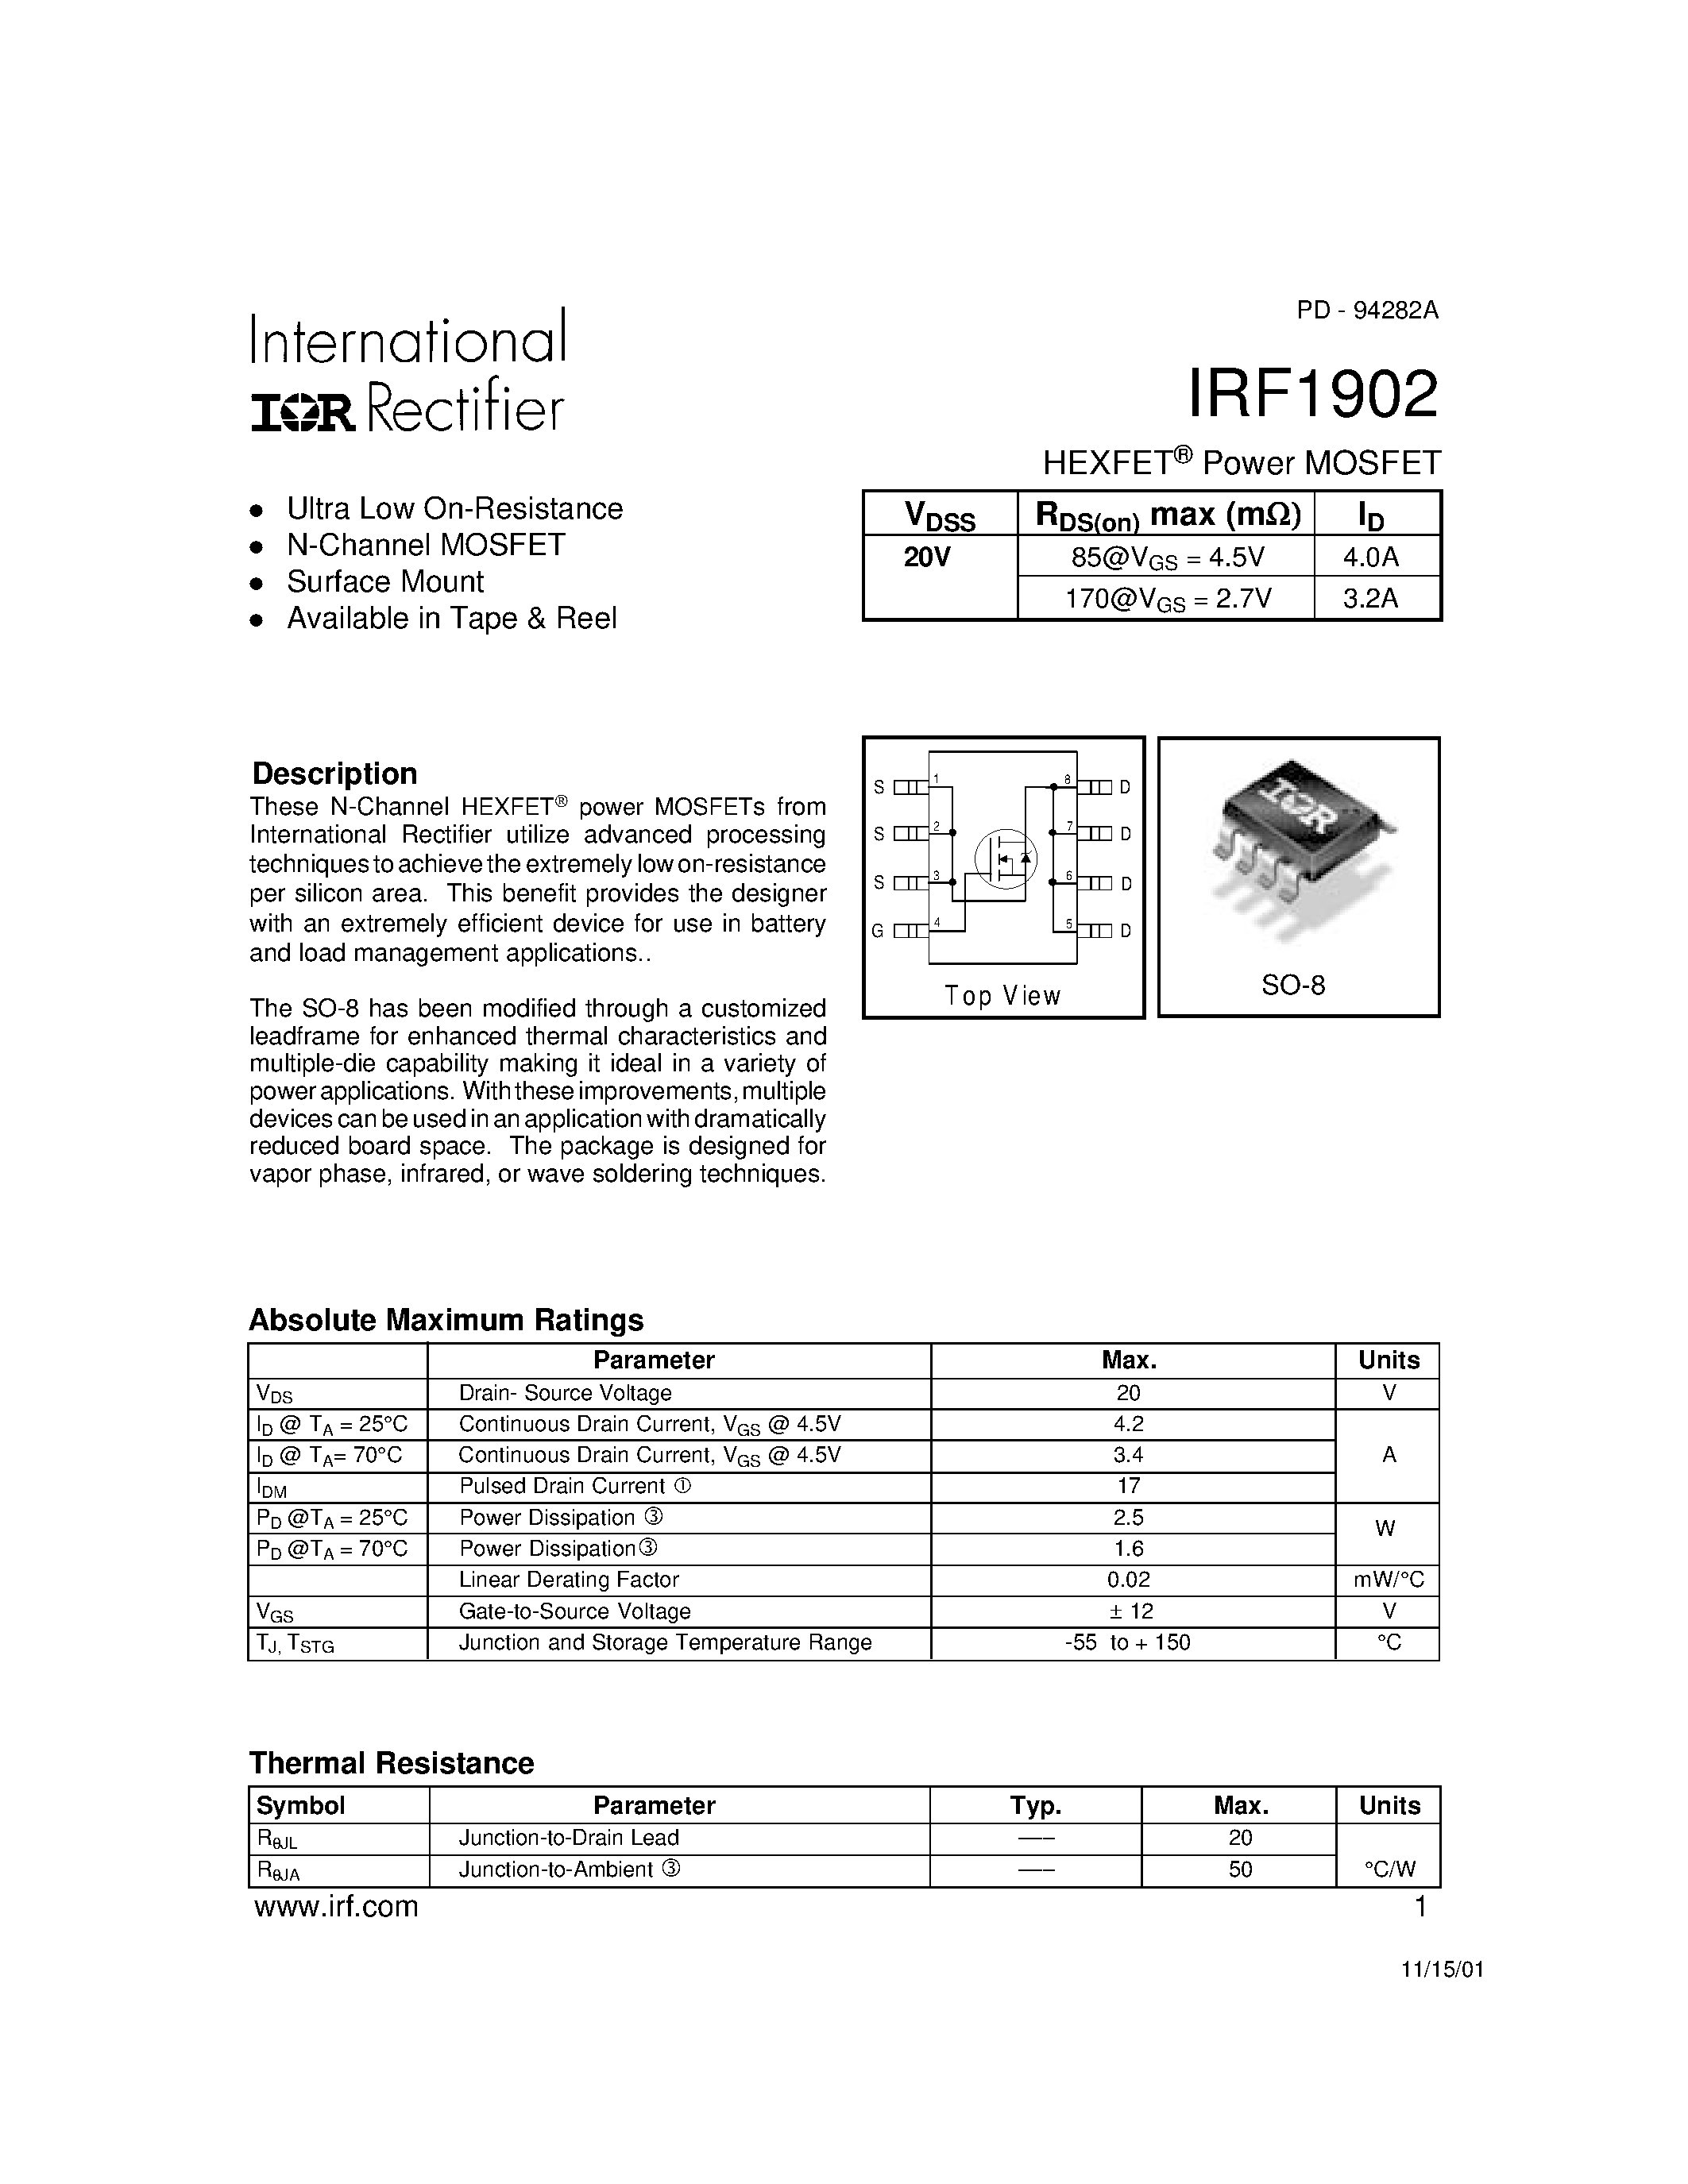 Даташит IRF1902 - Power MOSFET(Vdss=20V) страница 1